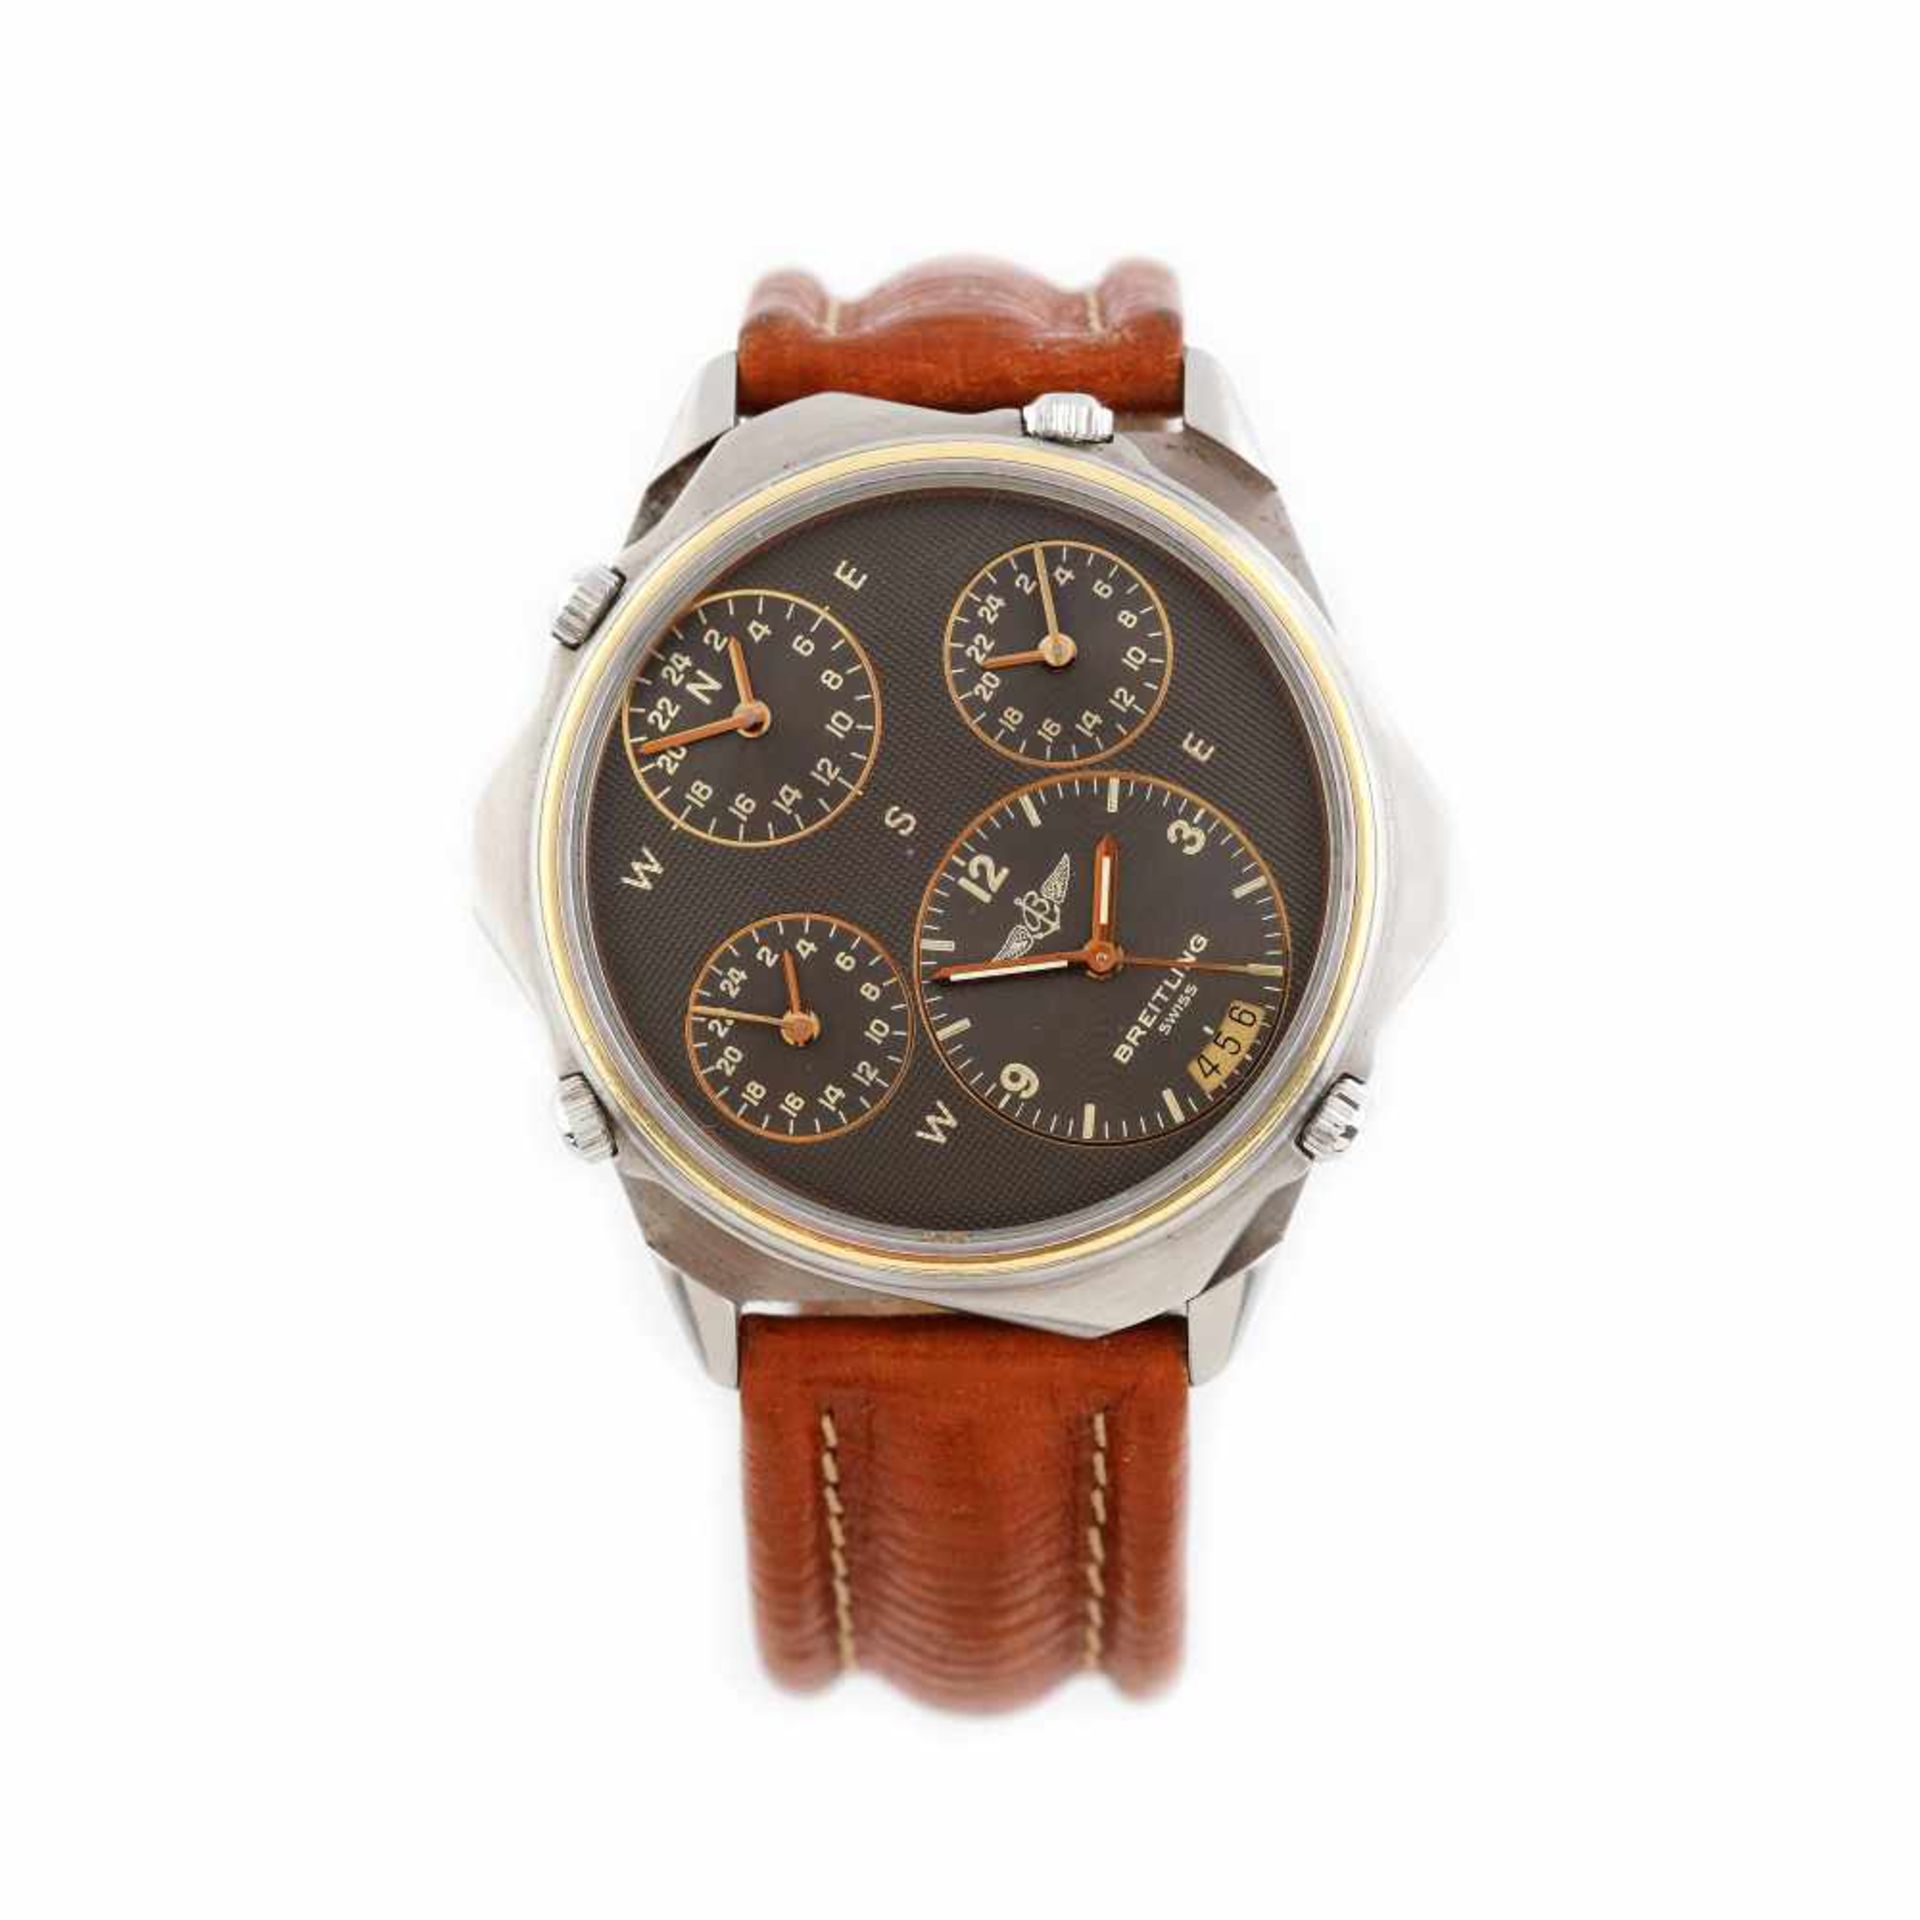 Breitling World Time GMT wristwatch, menBreitling World Time GMT wristwatch, men, reference 808 - Image 2 of 3